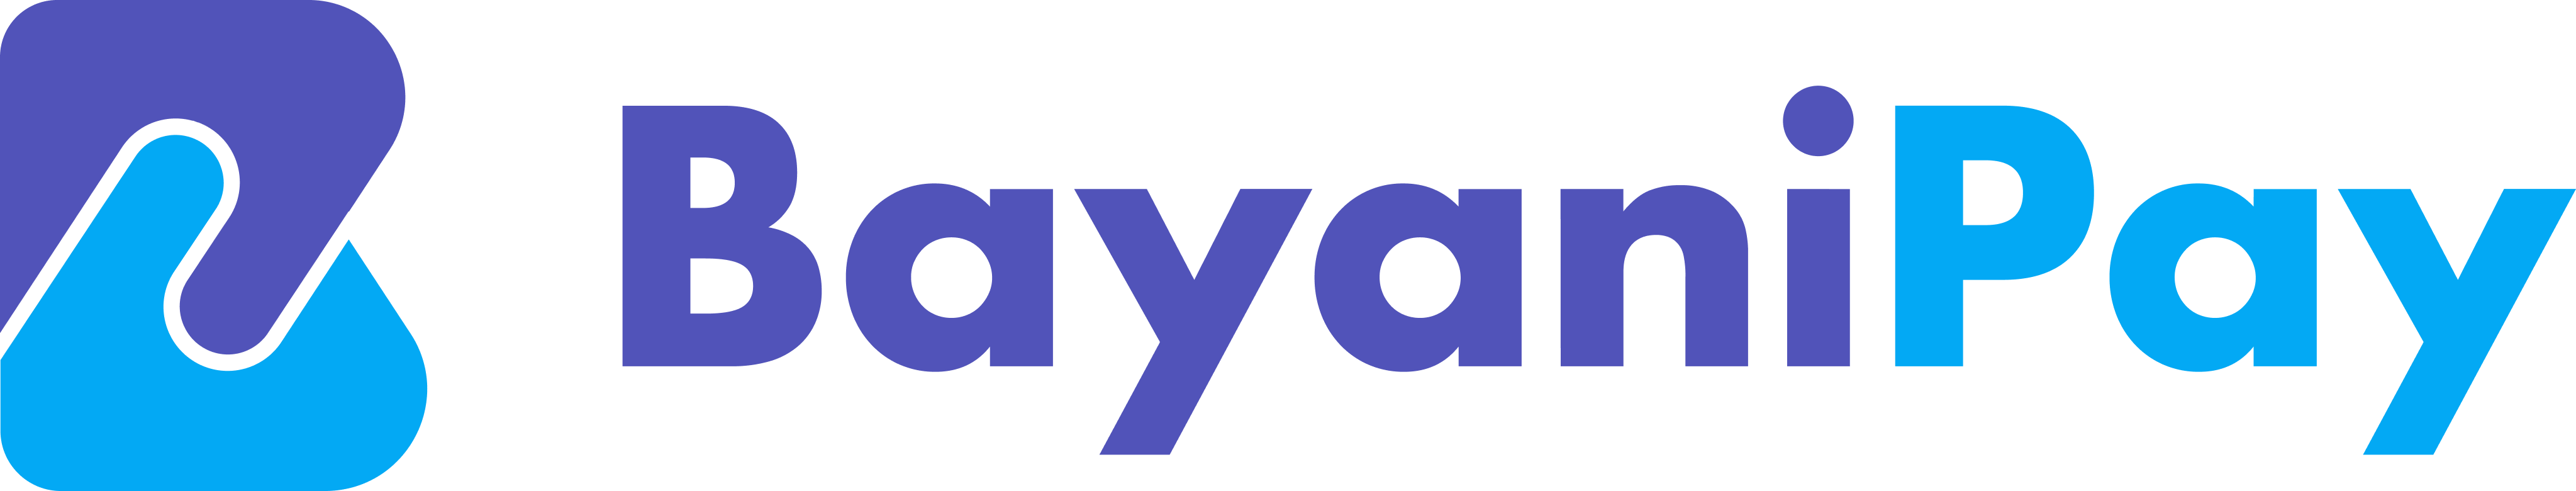 BayaniPay Logo.png